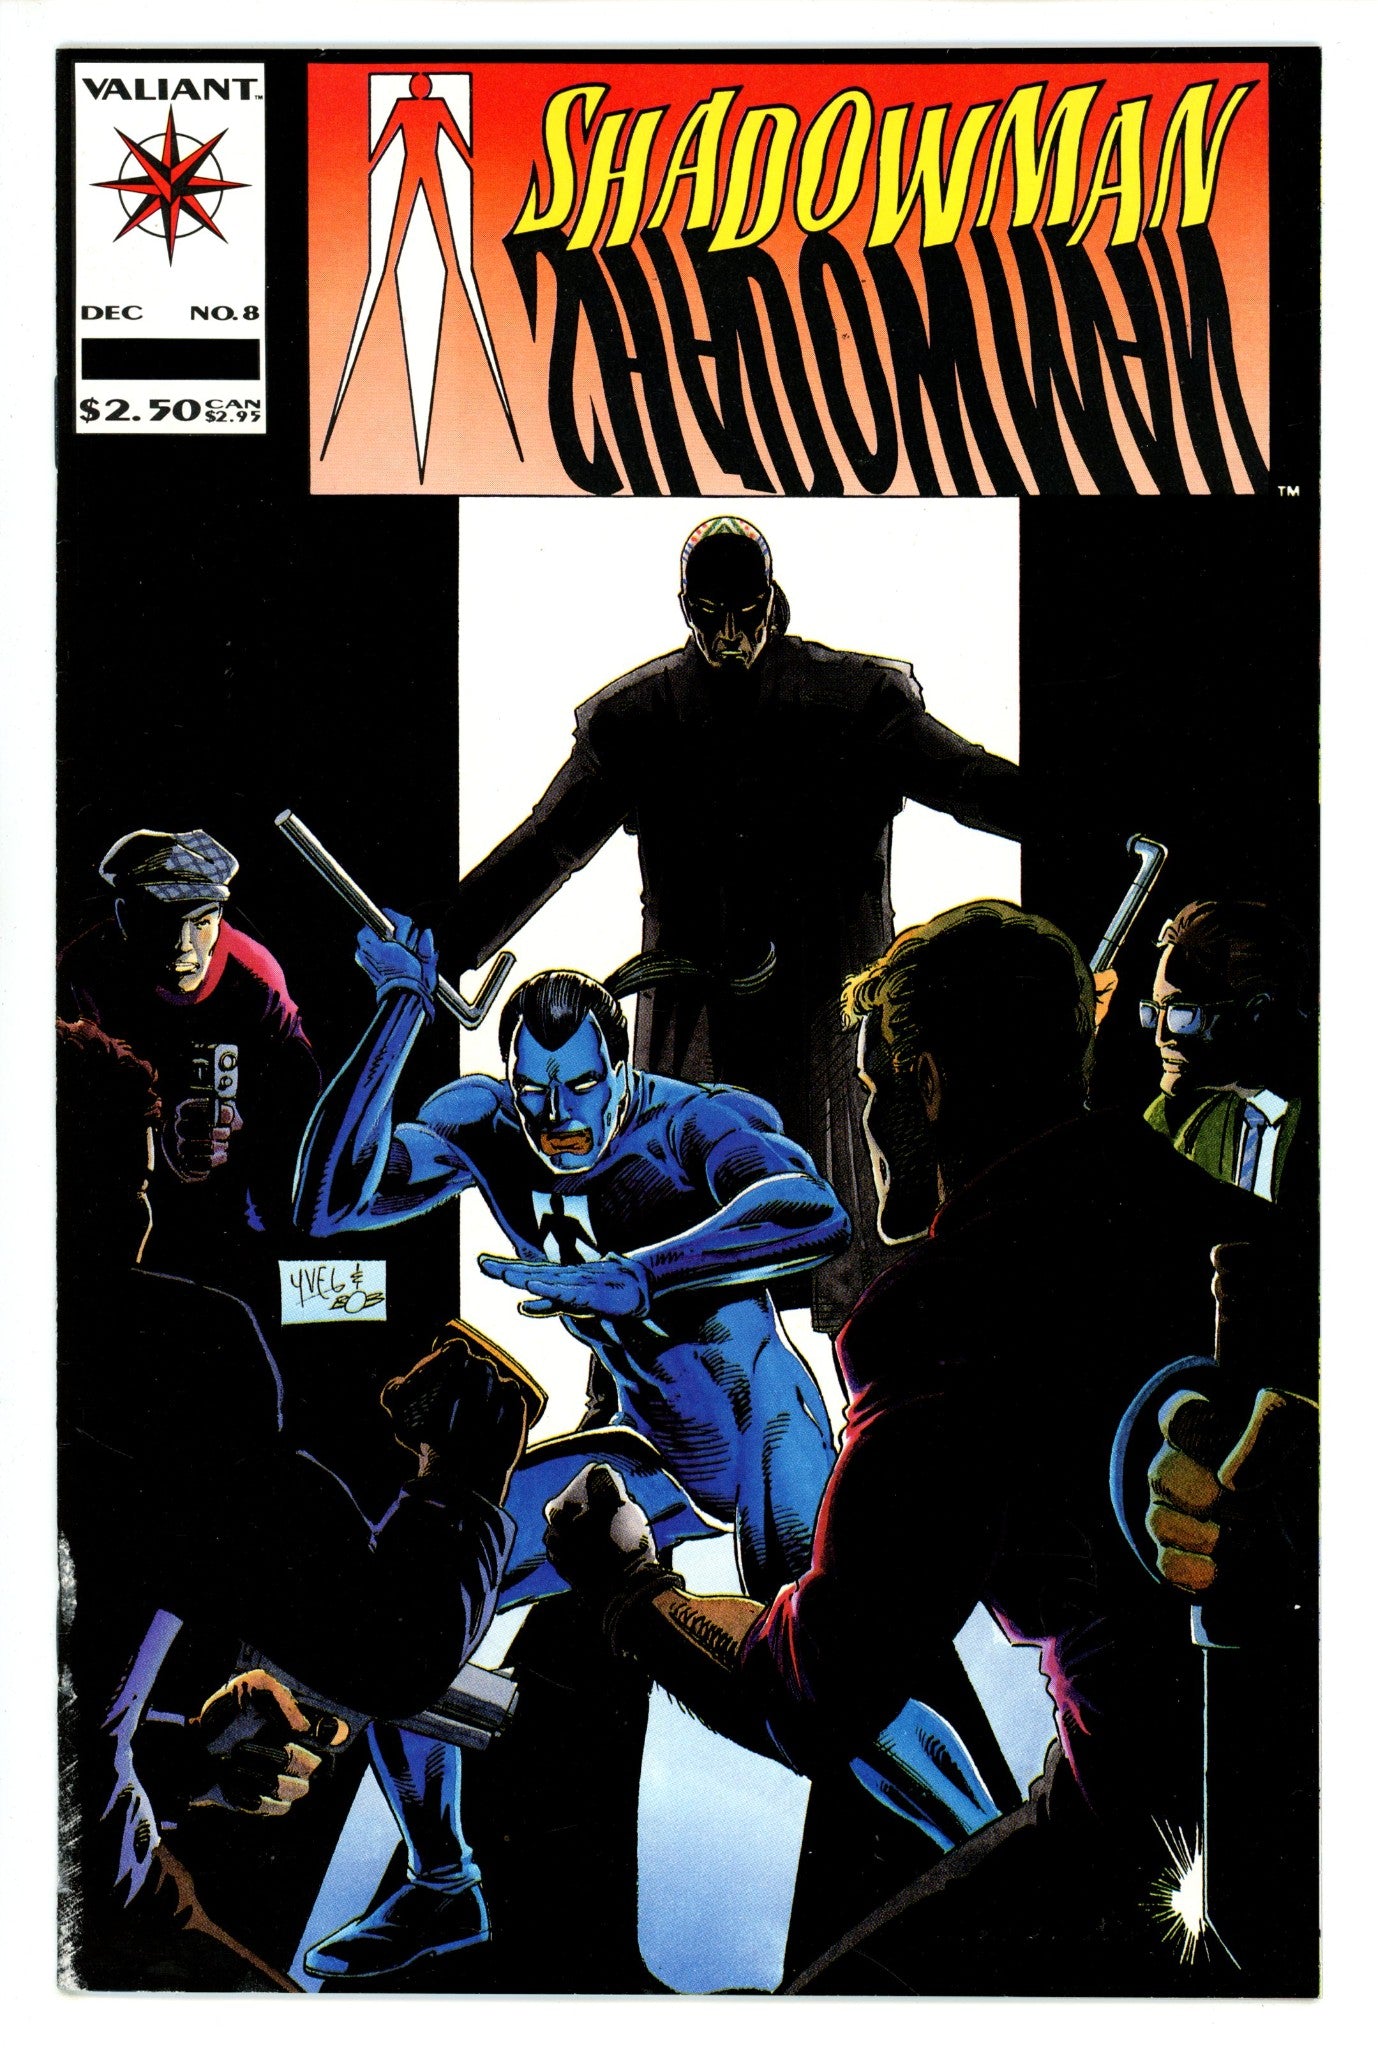 Shadowman Vol 1 8 (1992)